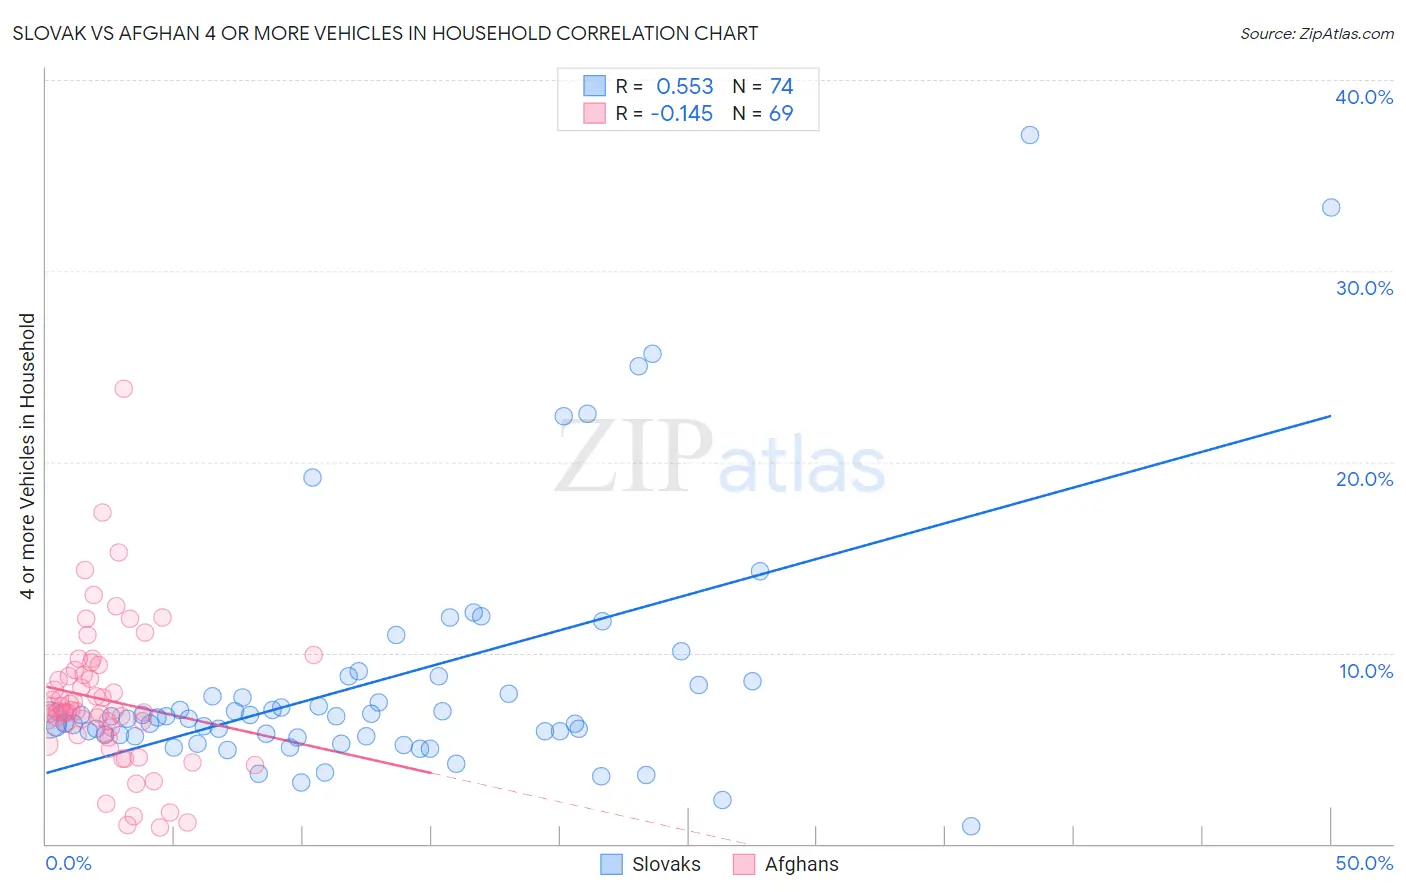 Slovak vs Afghan 4 or more Vehicles in Household